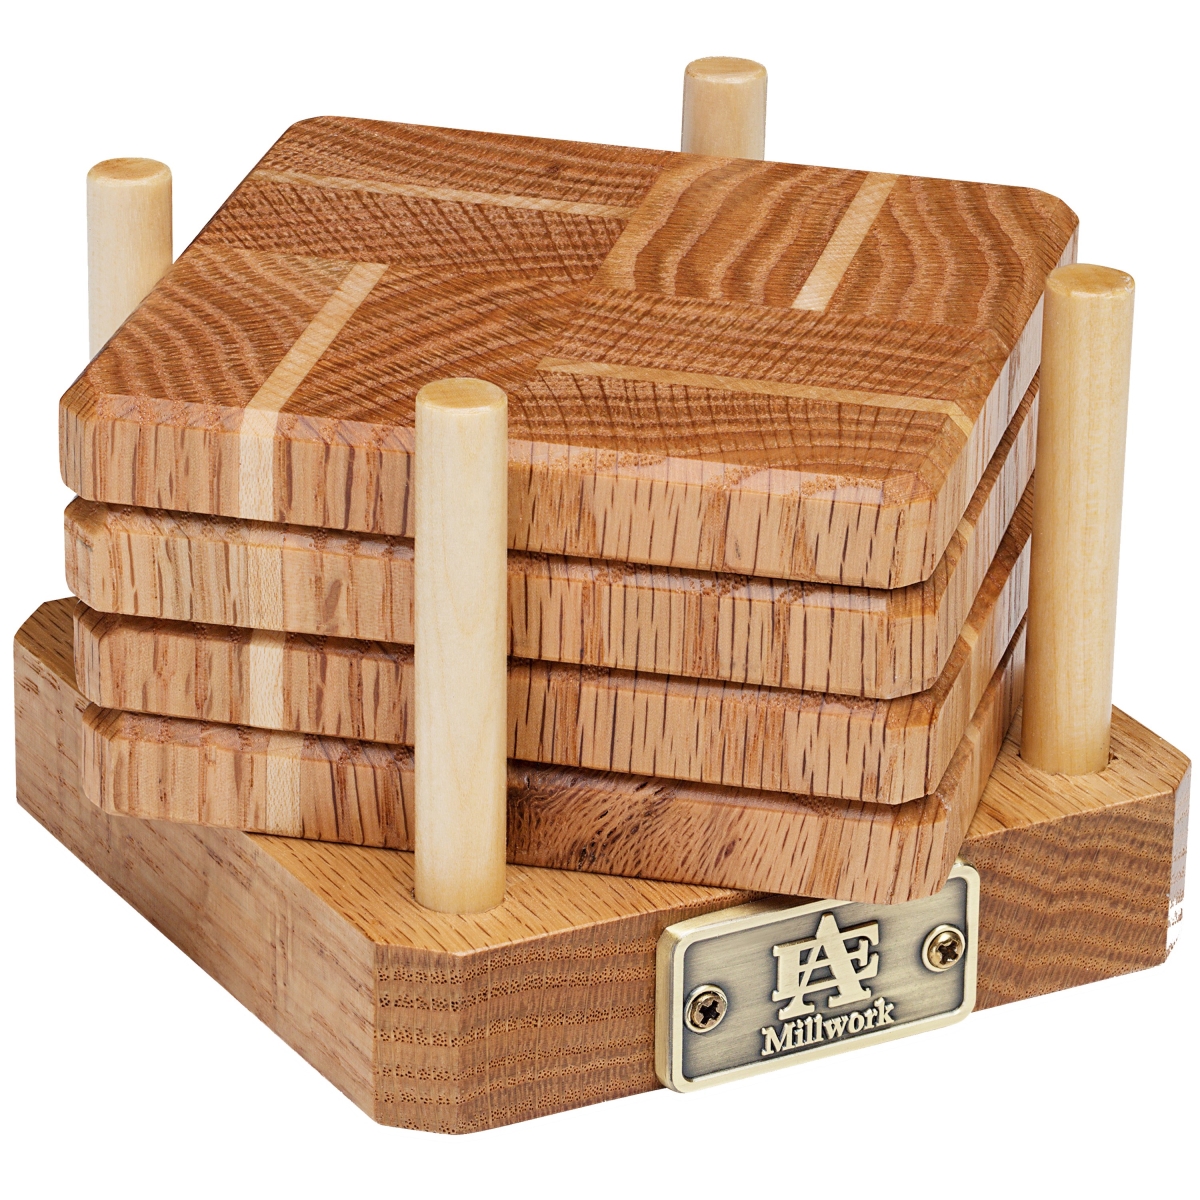 A & E Millwork AEM-5018 Oak & Maple Wood Coasters End Grain with Base - Set of 4